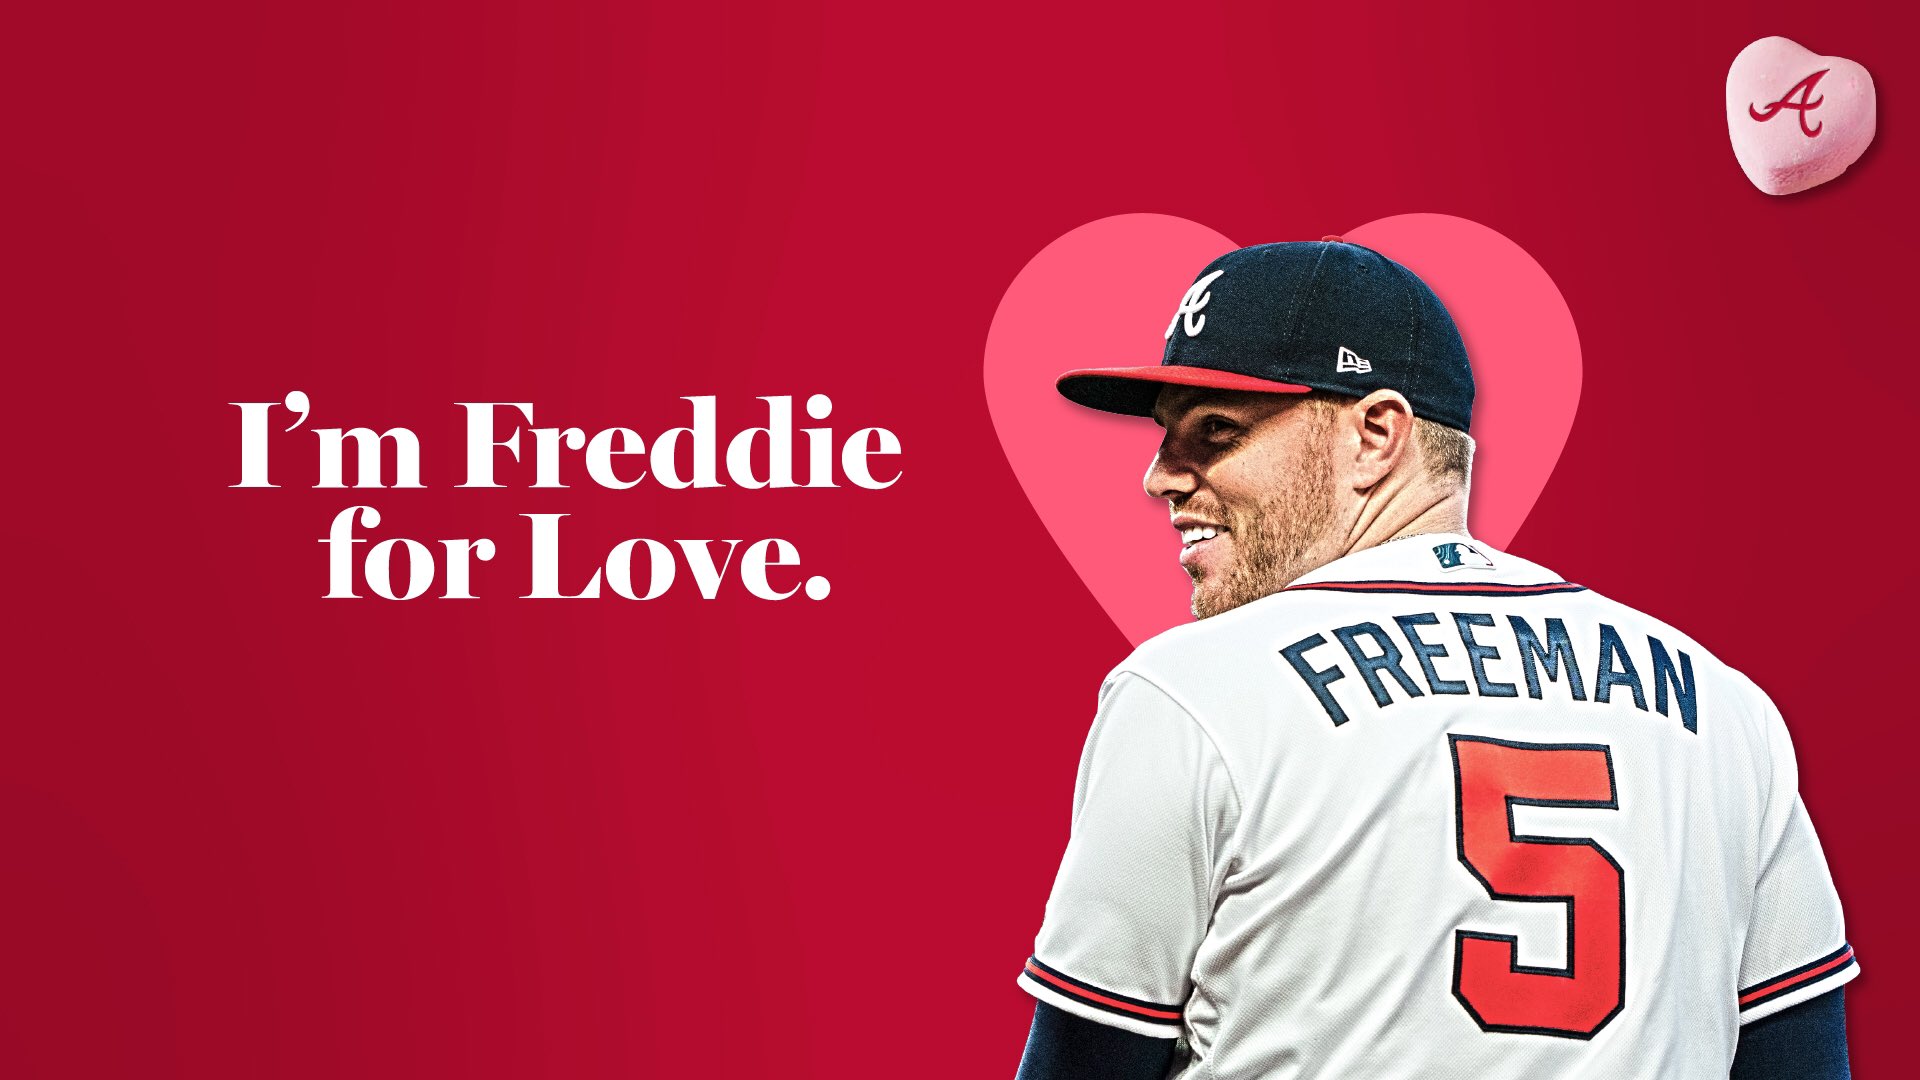 The Braves Spread the Love on Valentine's Day - Atlanta Mission